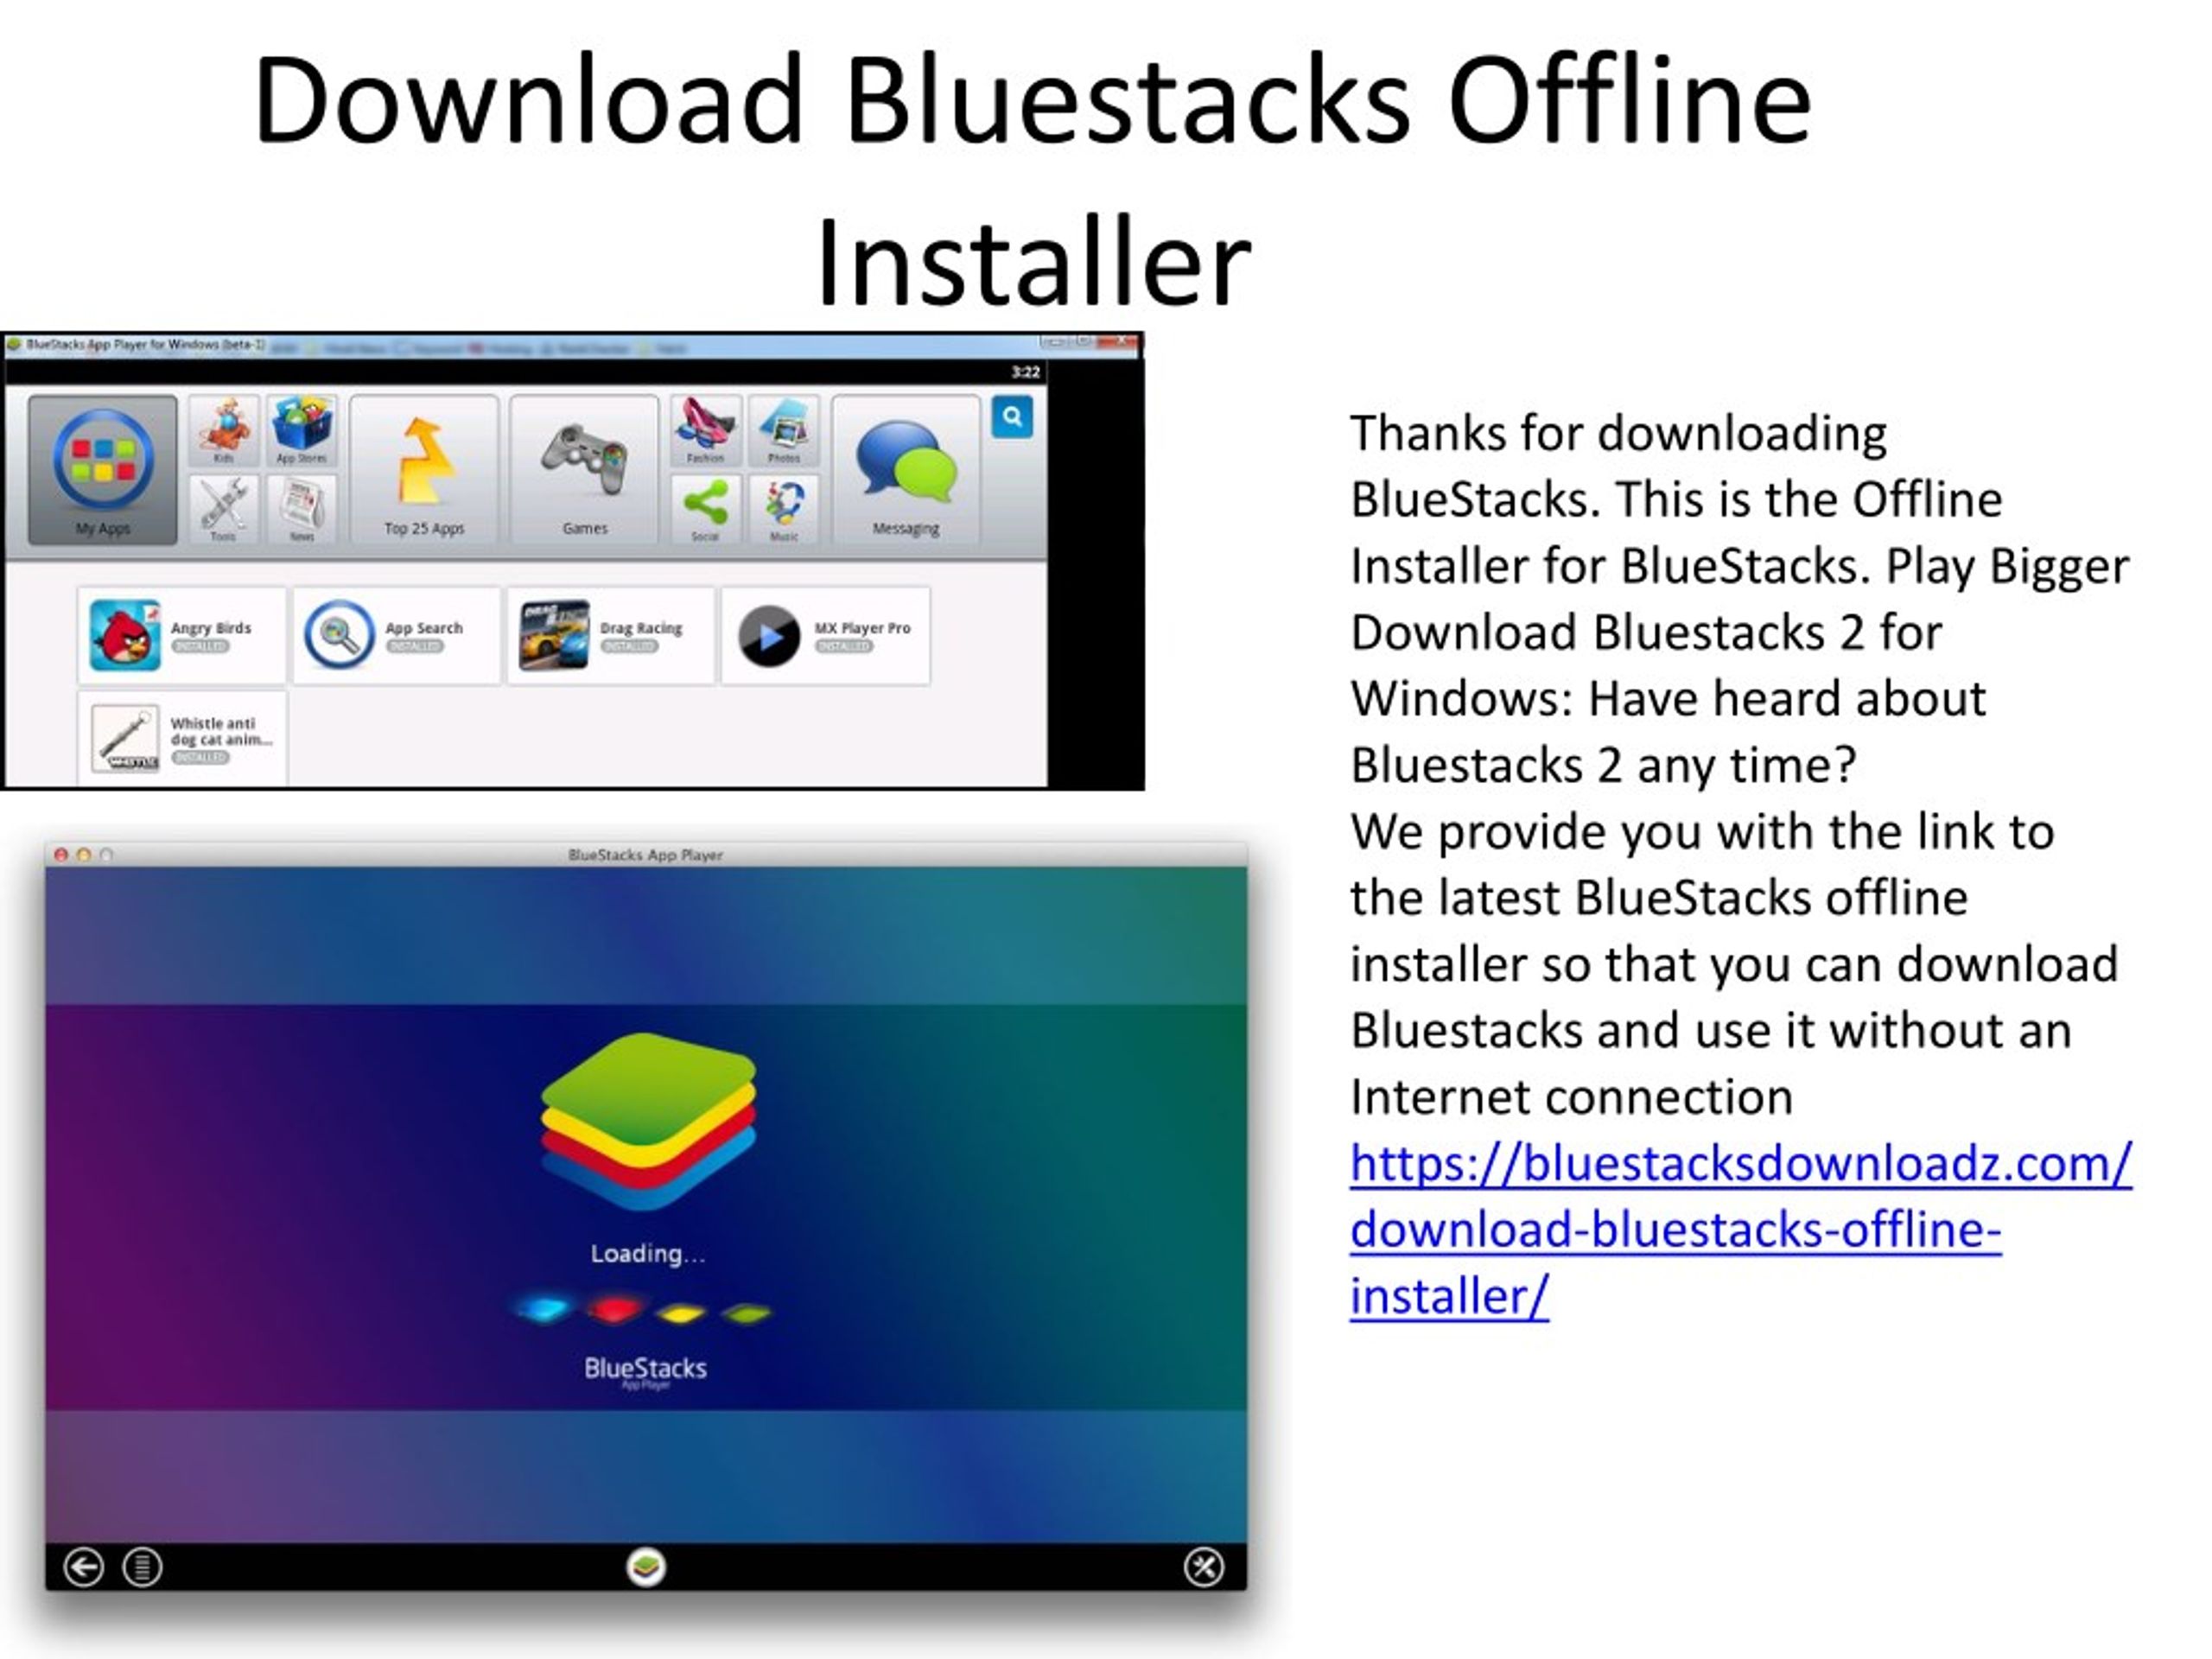 bluestacks app player for windows beta 1 offline installer